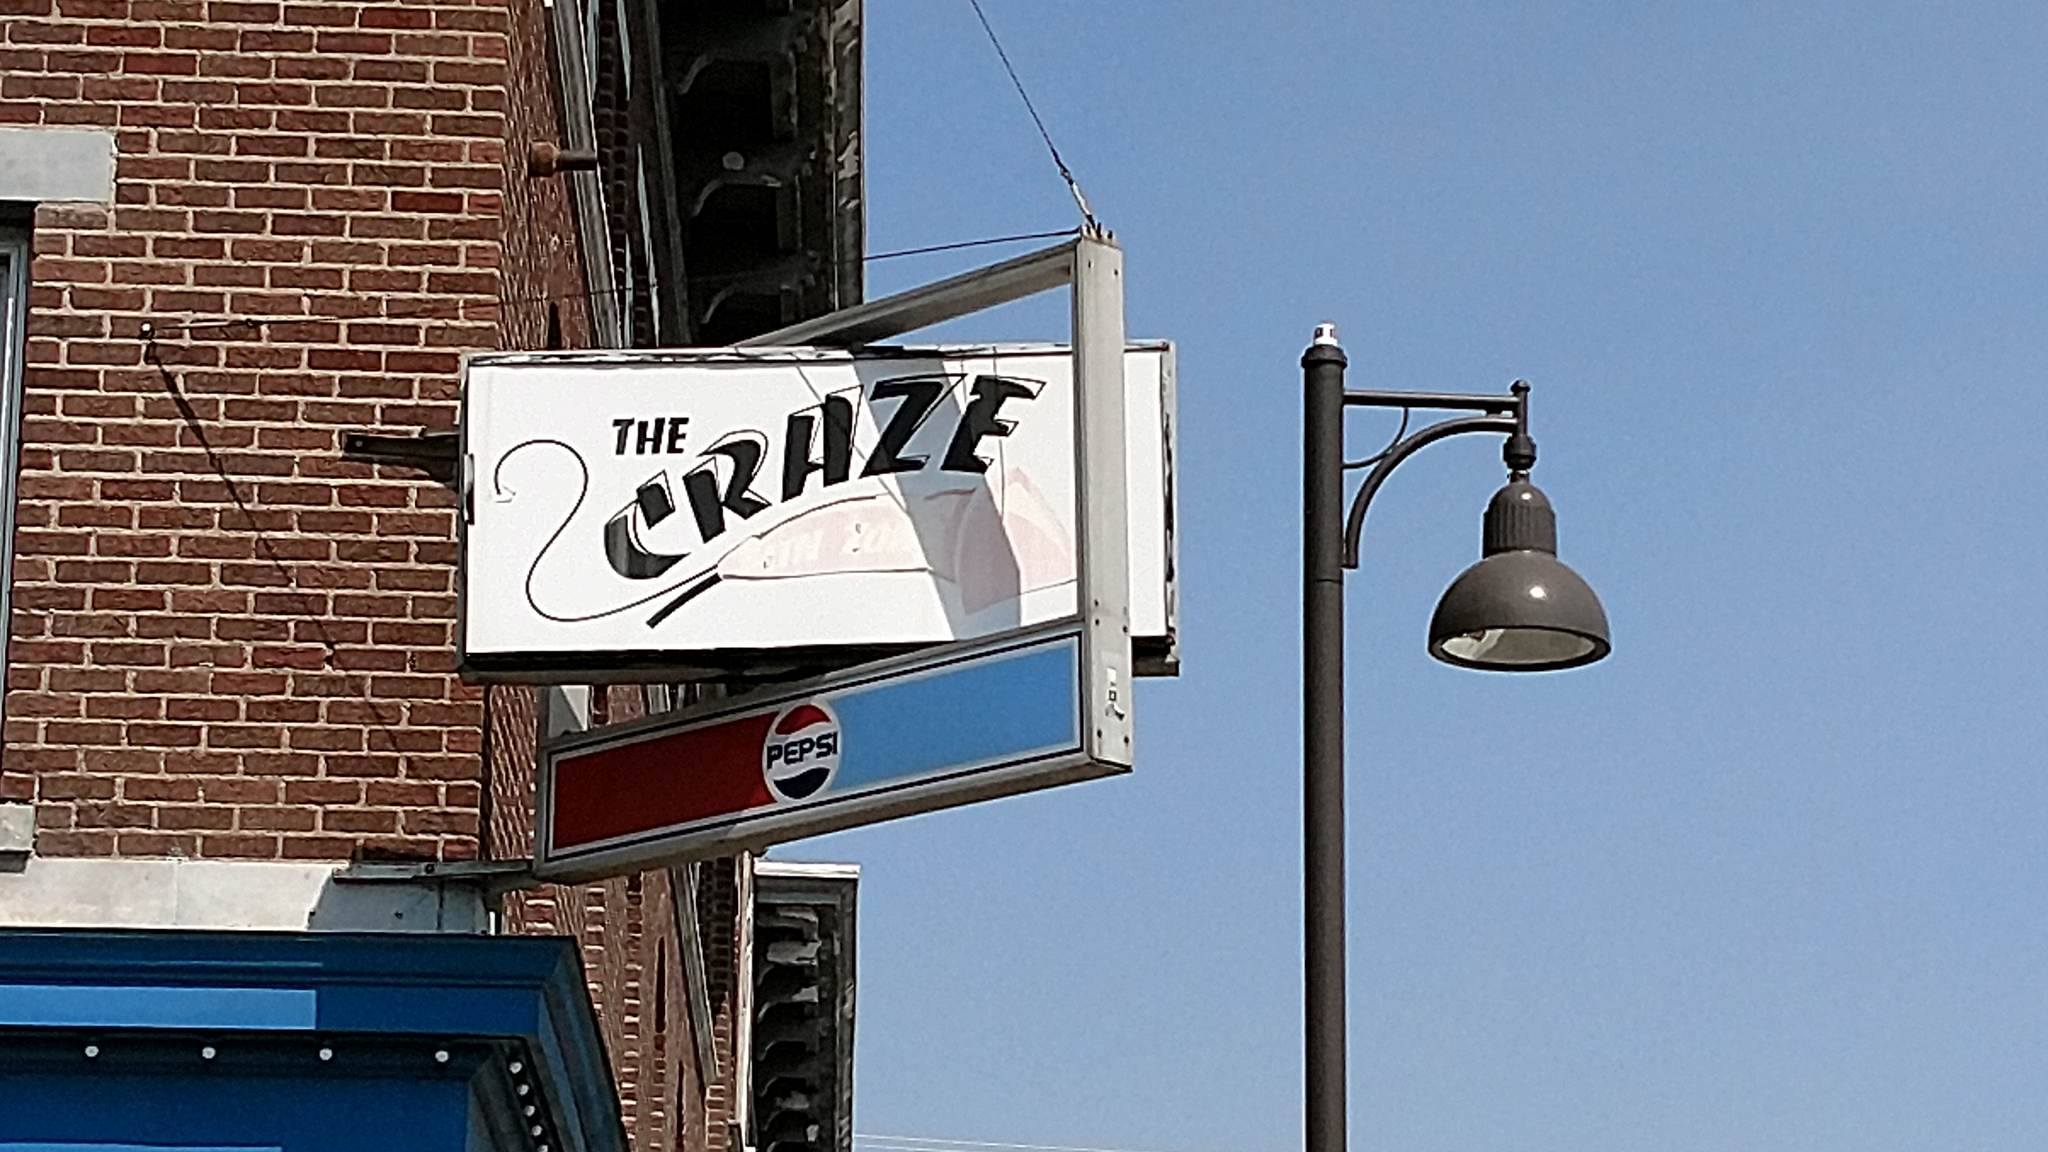 The Craze on College Ave in Rexburg.